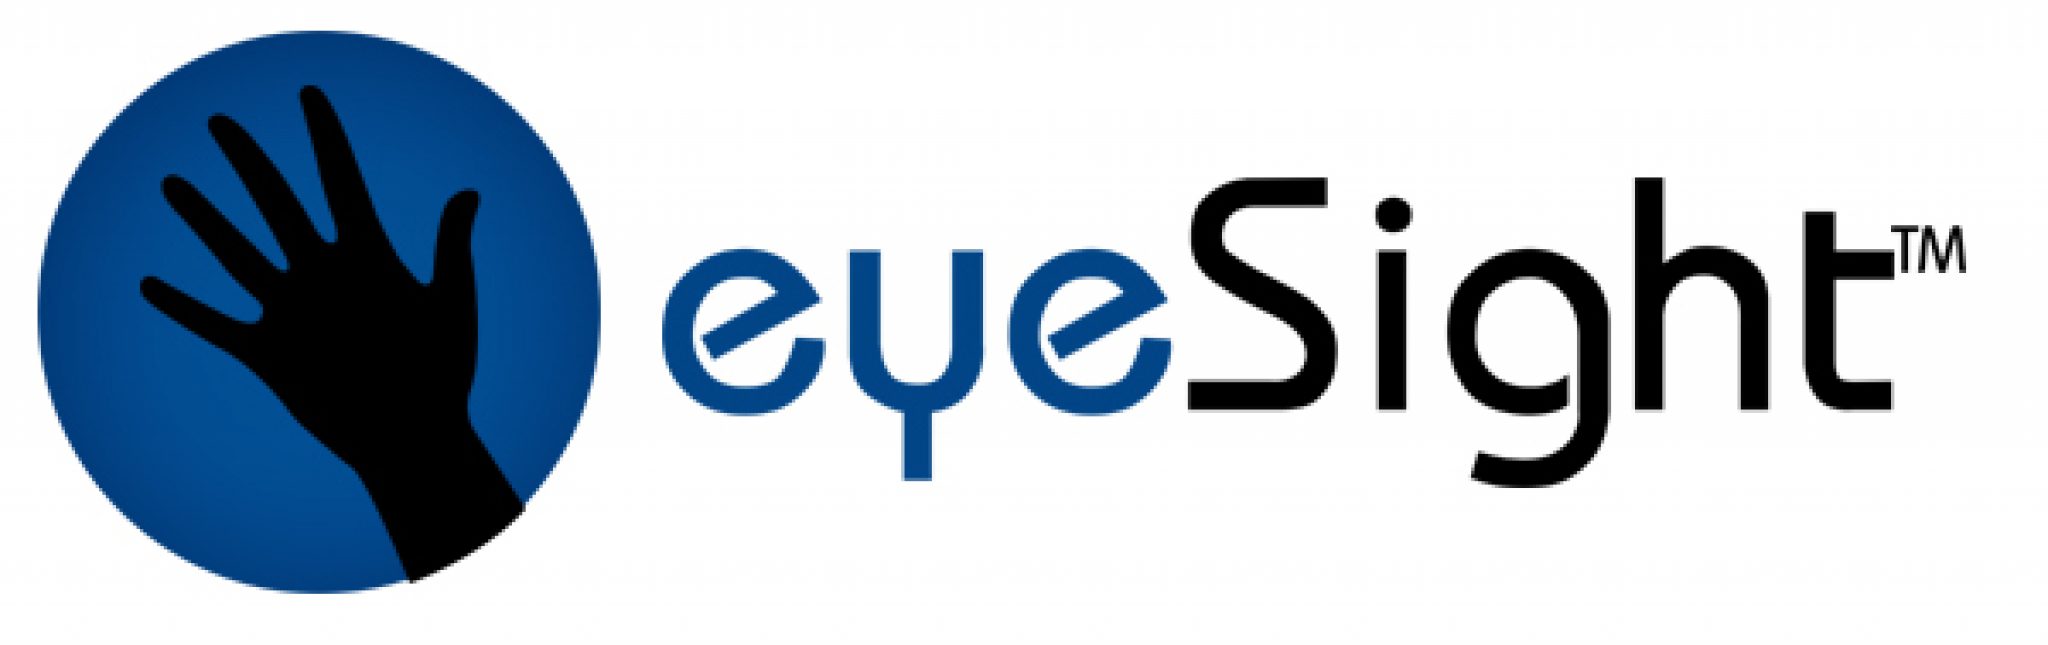 eyeSight: The Embedded Vision Alliance's Latest Member Takes Flight ...